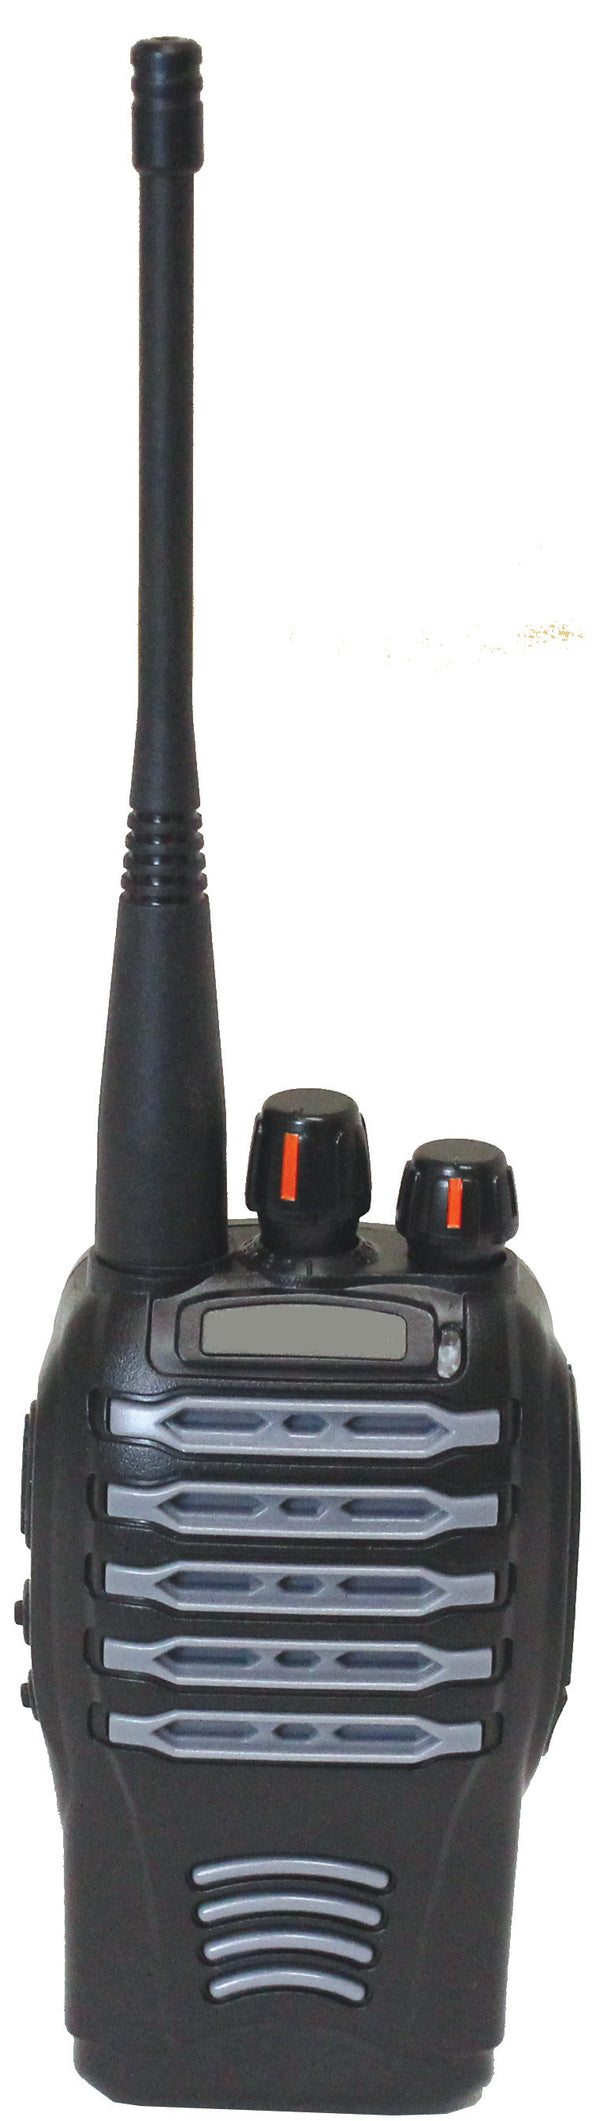 UA700 UHF Compact Waterproof And Dust-Proof Radio